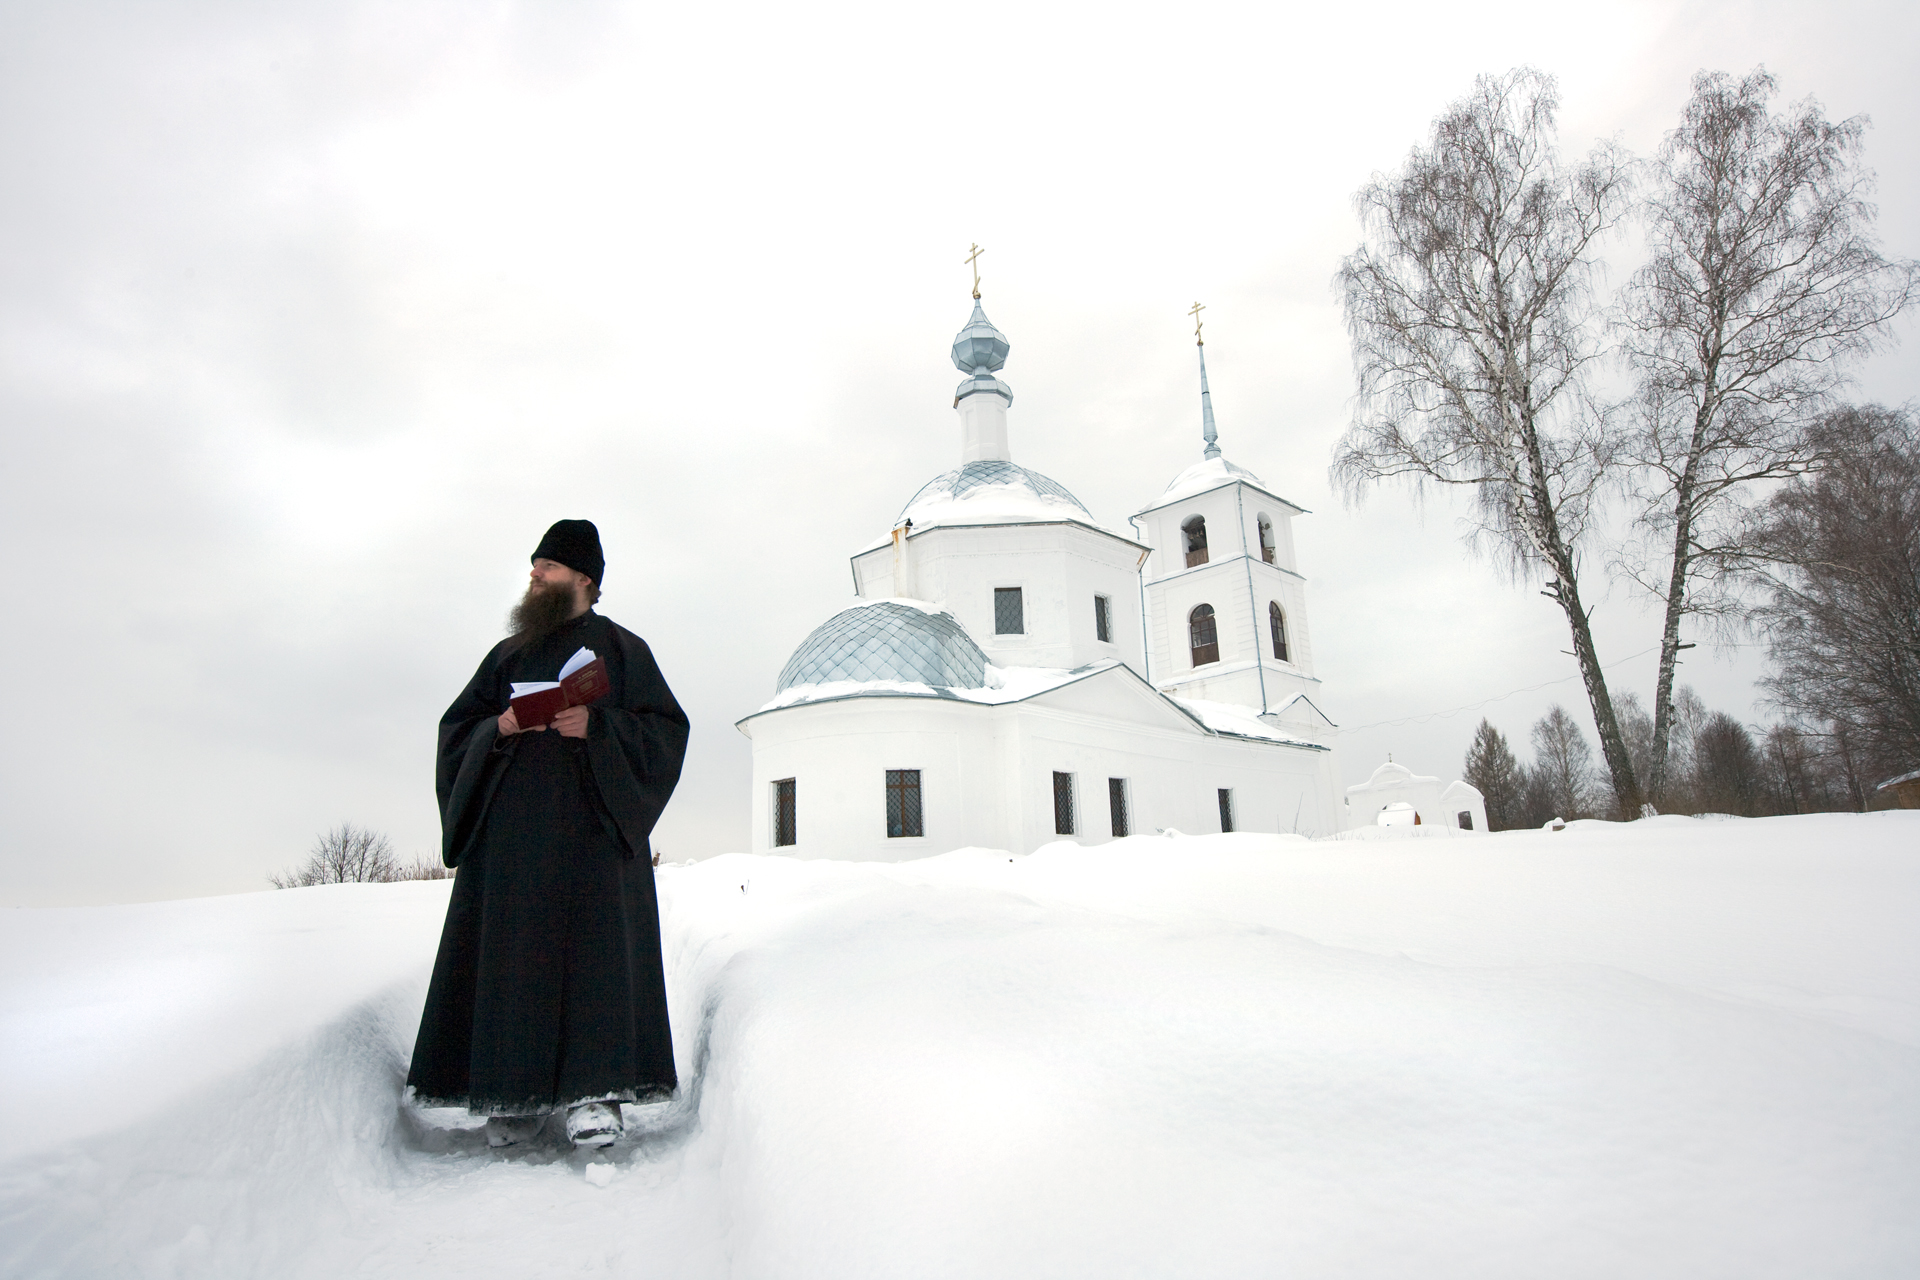  Father Sevastyan meditates at Svytao-Kazansky hermitage, one of many Russian Orthodox communities resurrecting across the land.  Near Murom, Russia  